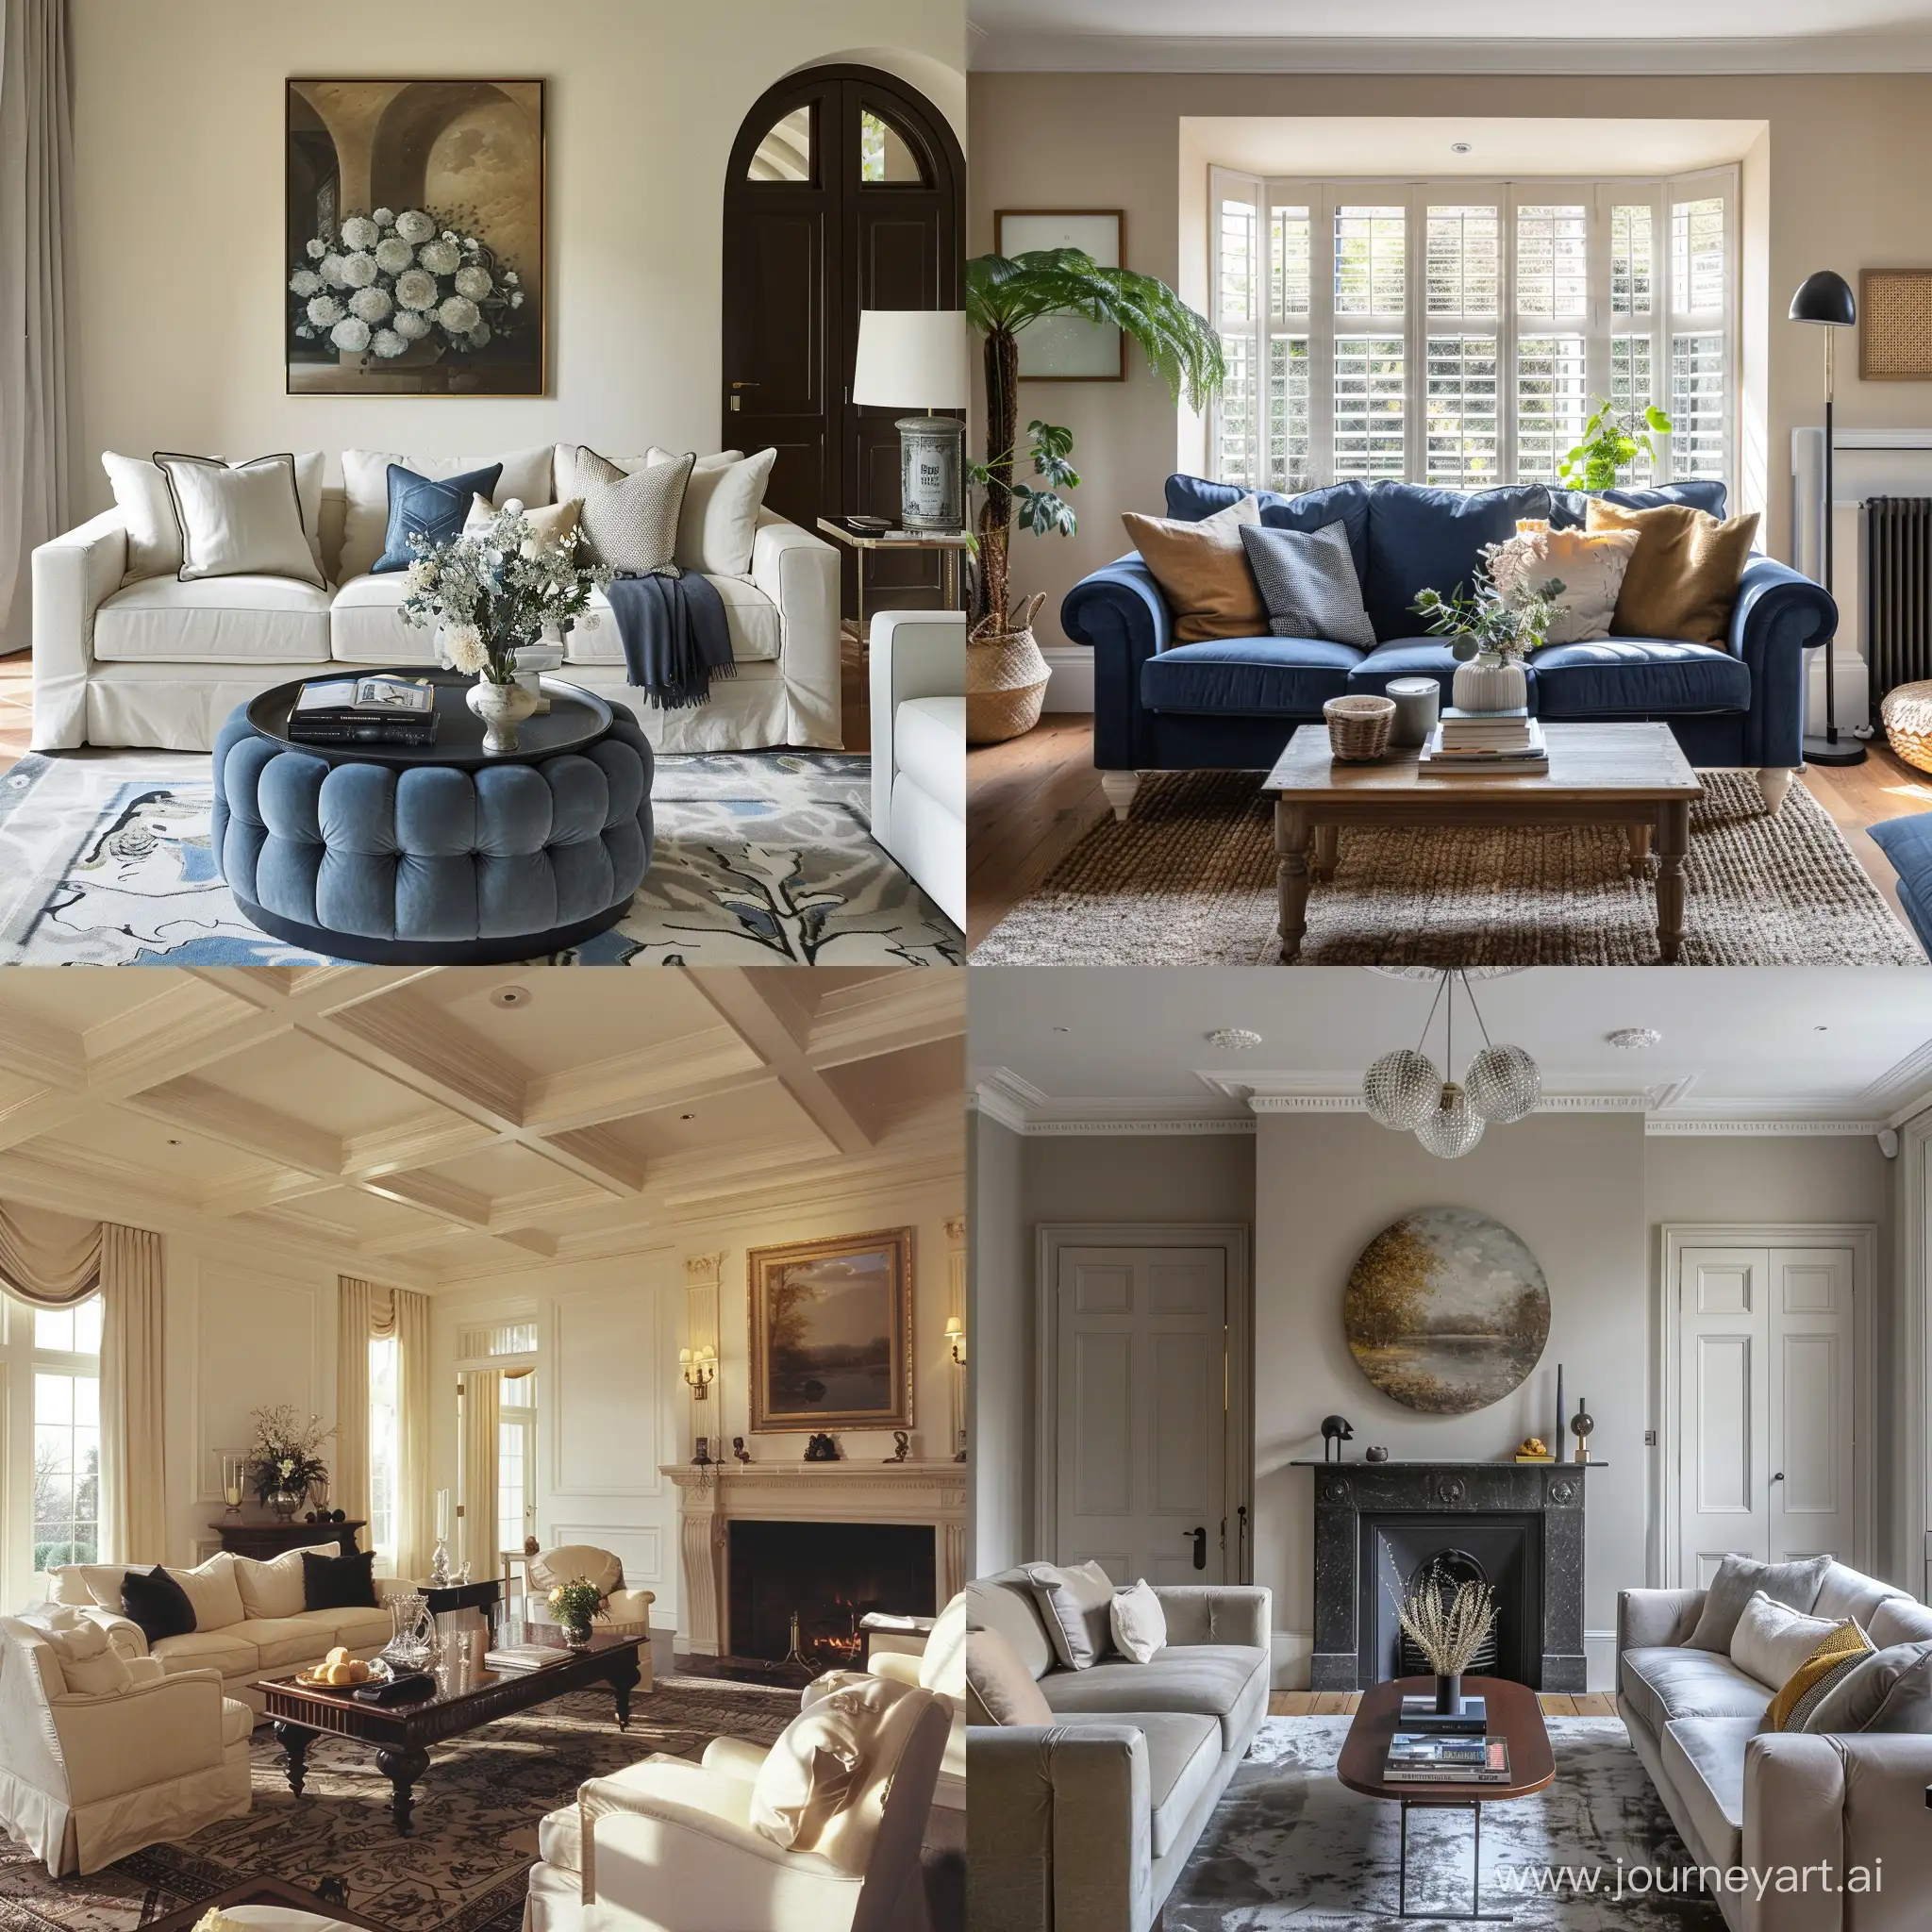 Cozy-Living-Room-Interior-with-Modern-Decor